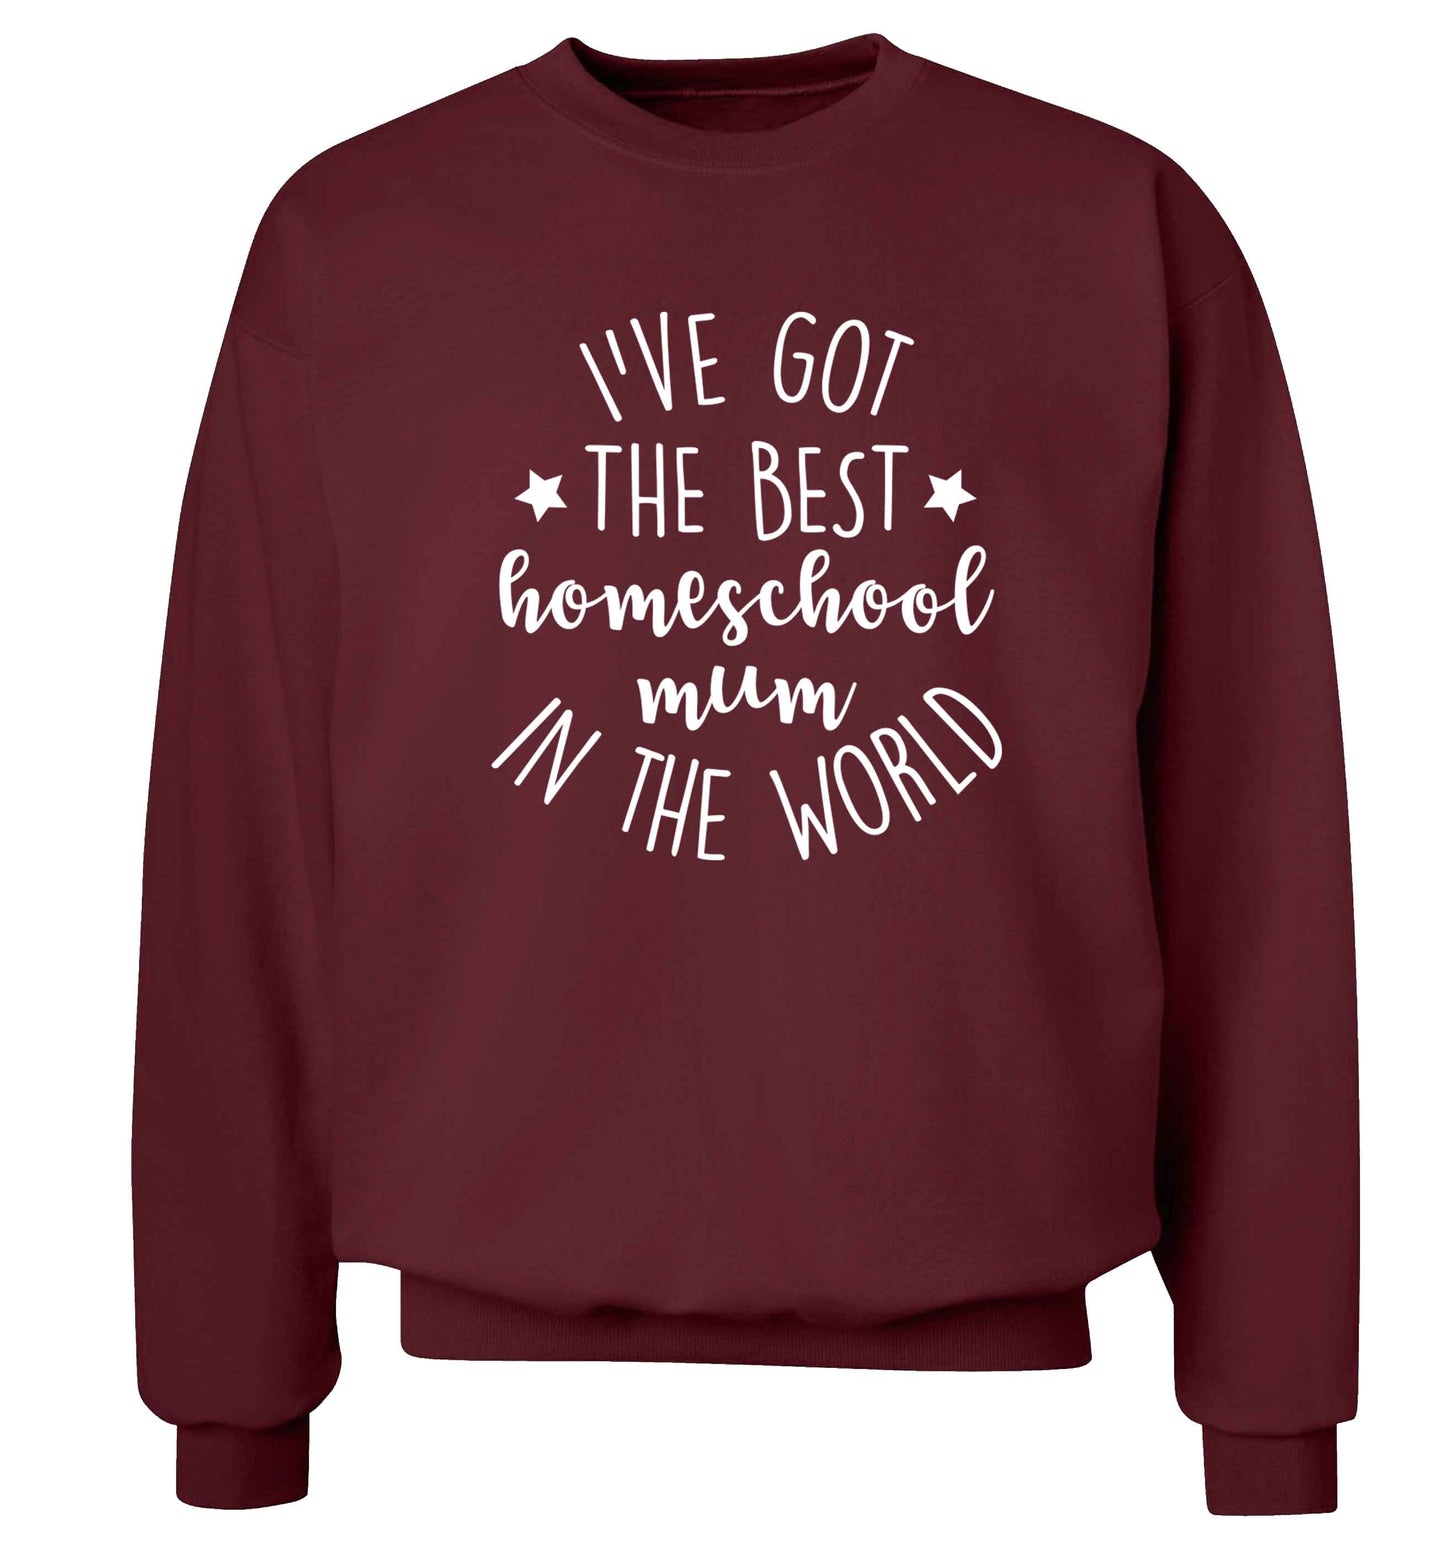 I've got the best homeschool mum in the world Adult's unisex maroon Sweater 2XL